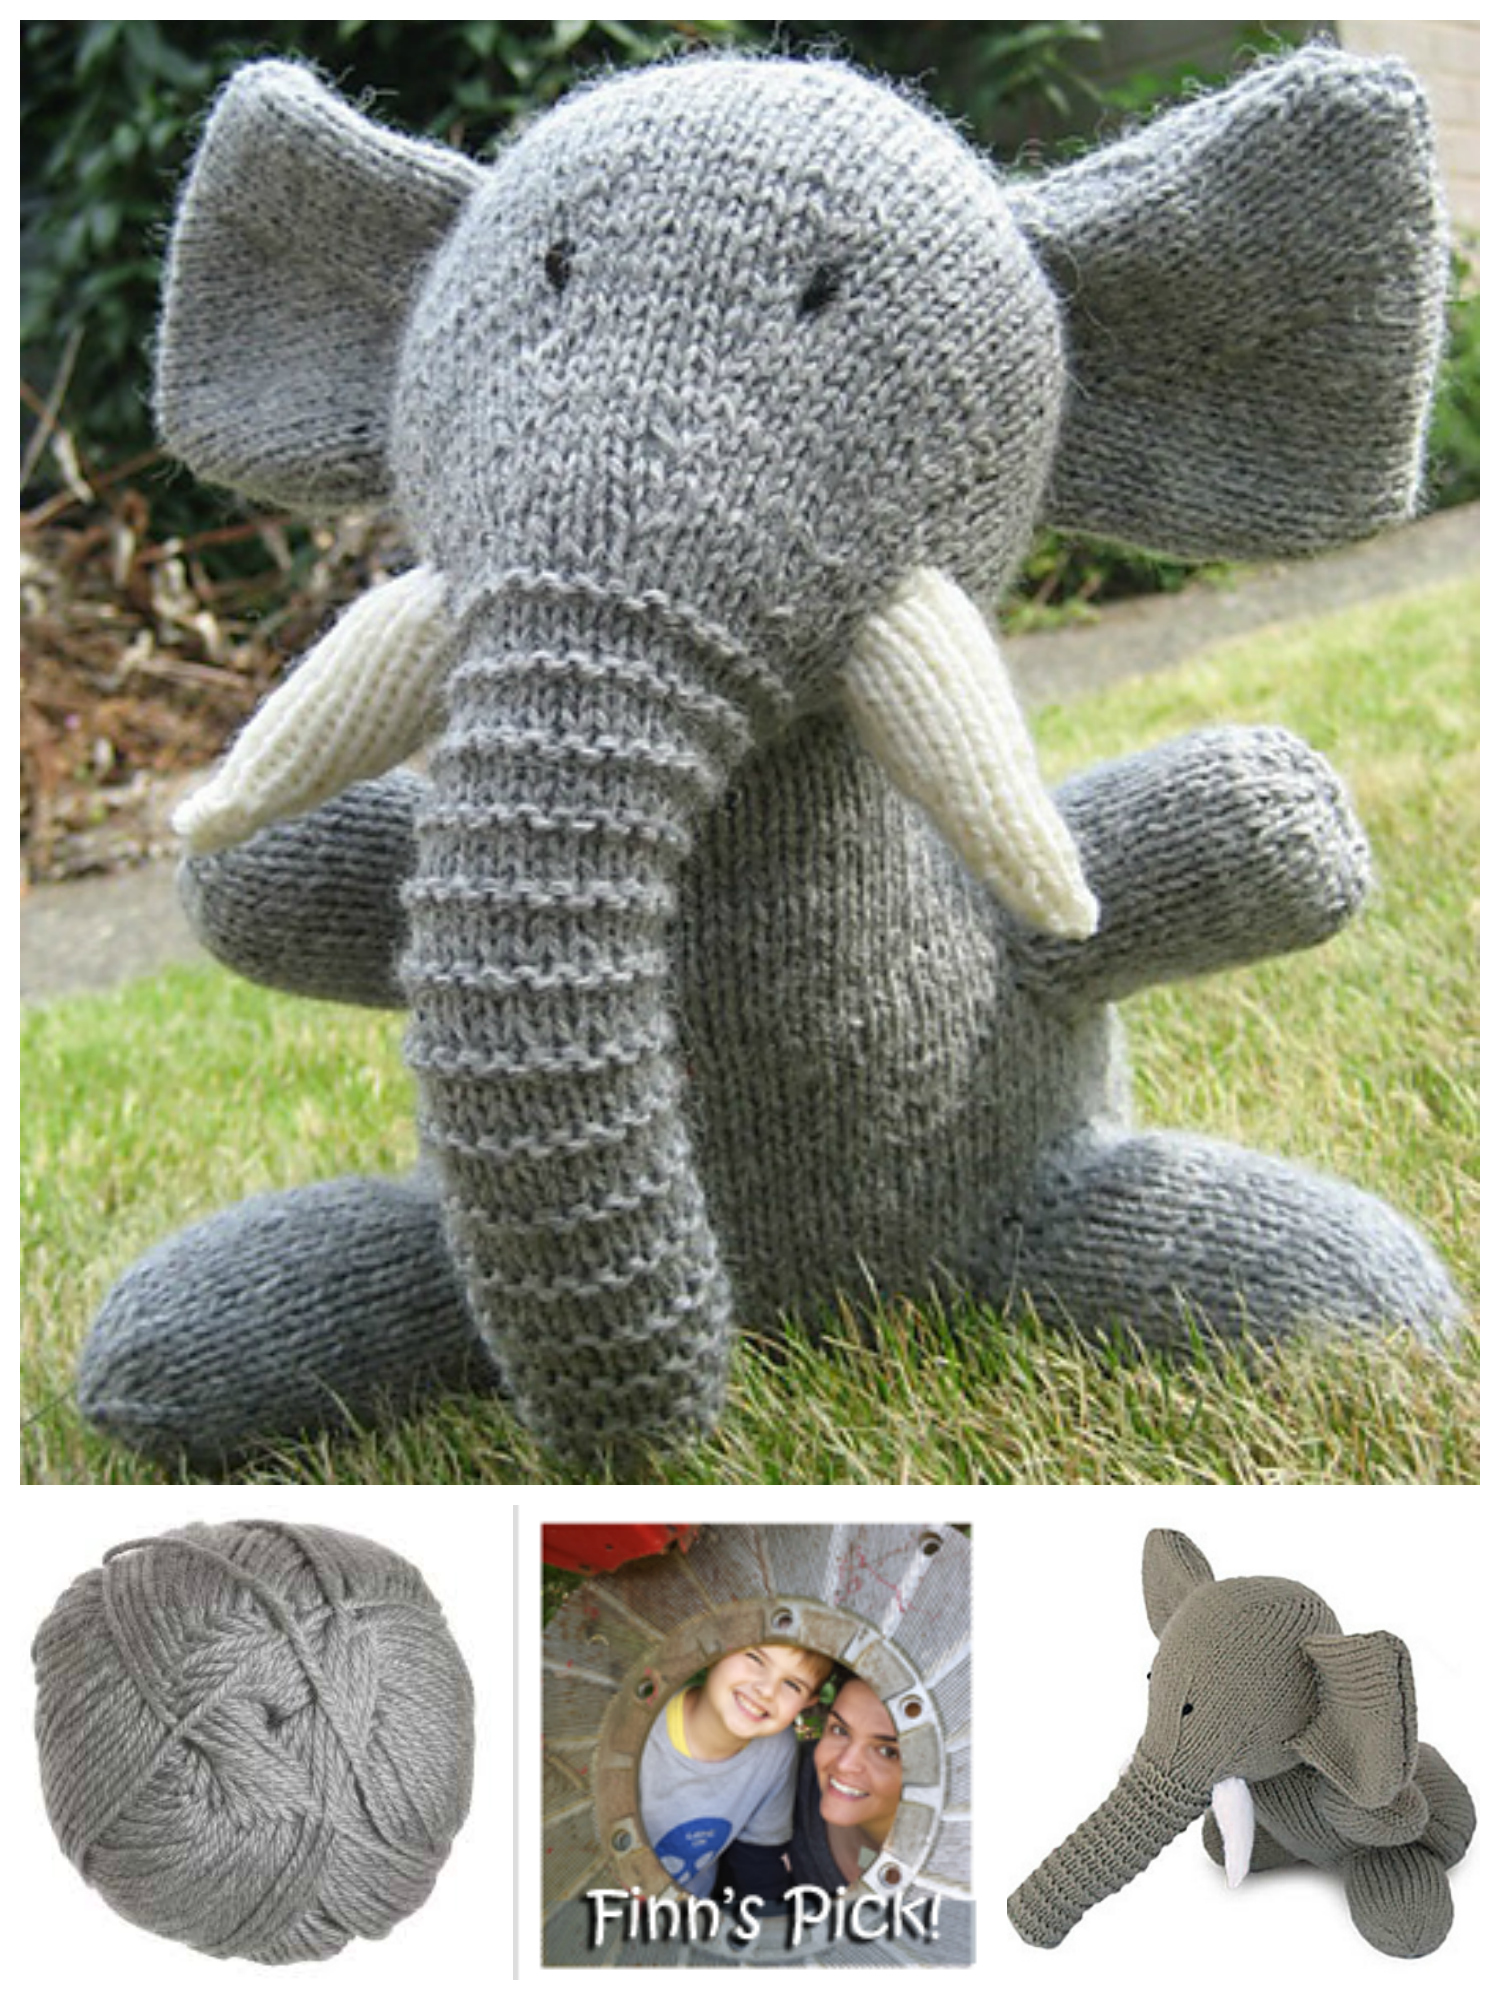 Finn's Pick: Knit Elephant by Sarah Keen - FREE Pattern!